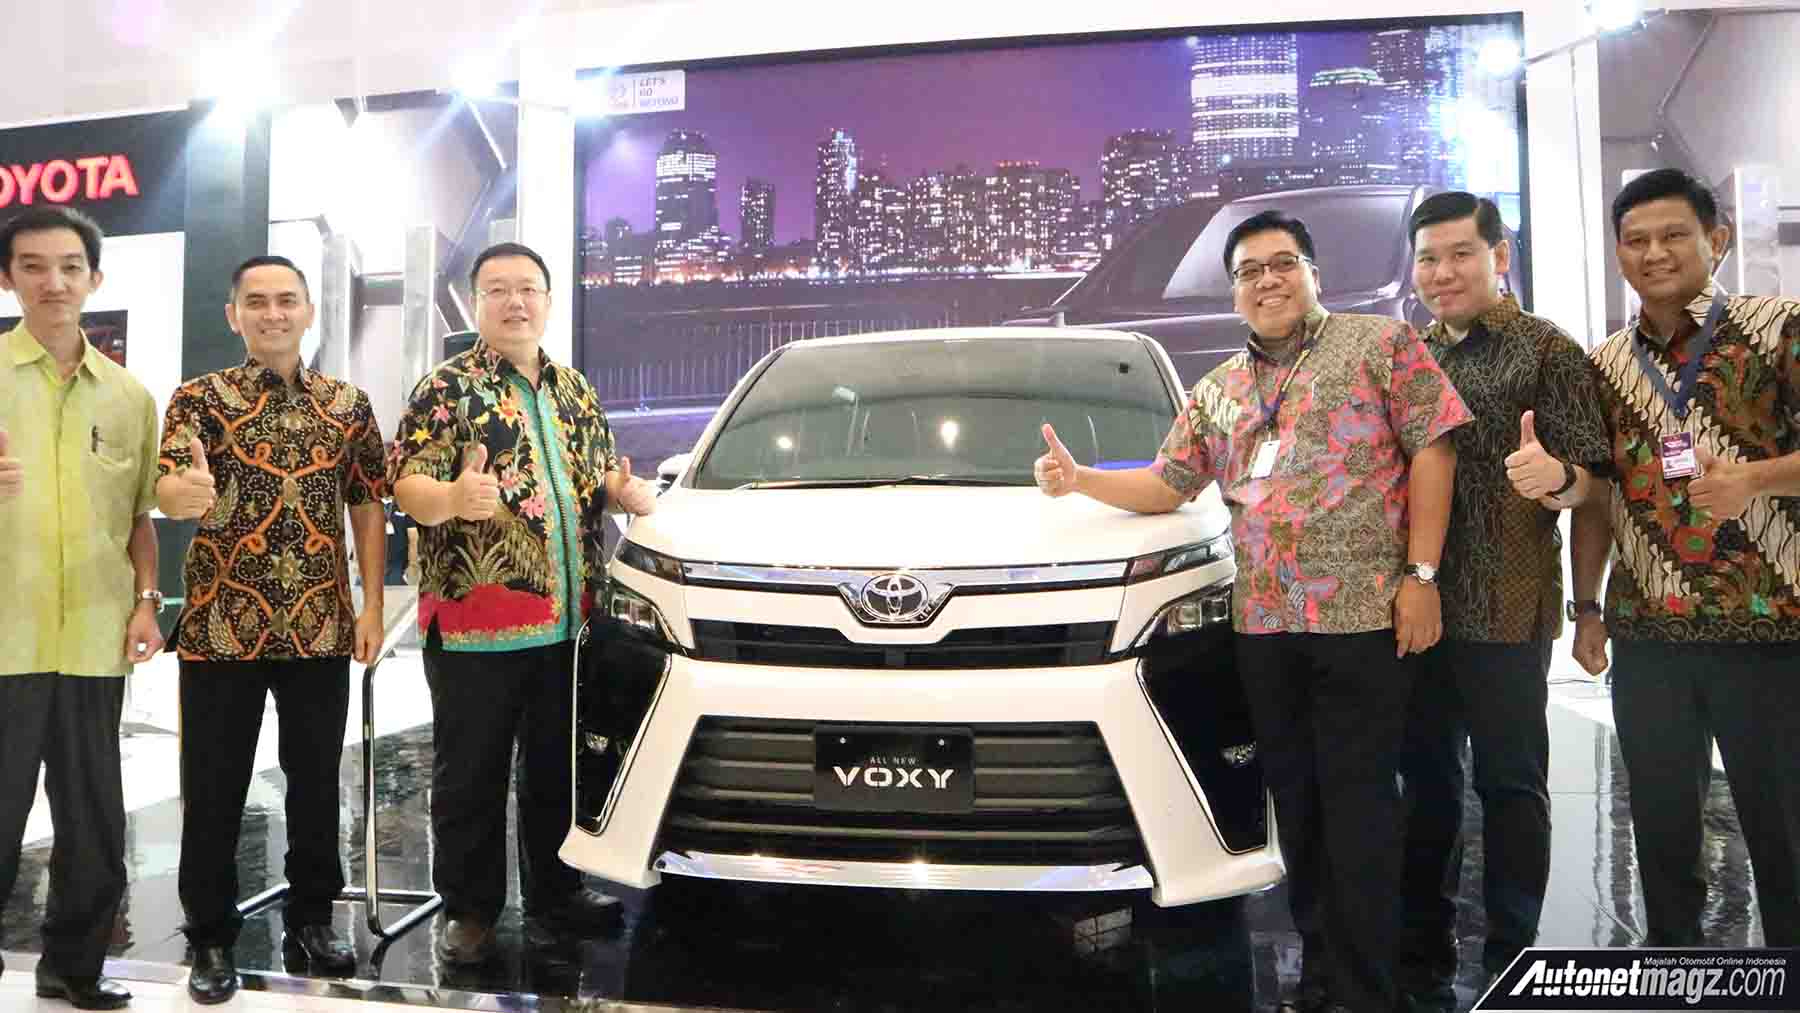 Berita, toyota di GIIAS Surabaya Auto Show 2017: GIIAS Surabaya Auto Show 2017 : Sejumlah Produk Baru Diperkenal Untuk Jatim